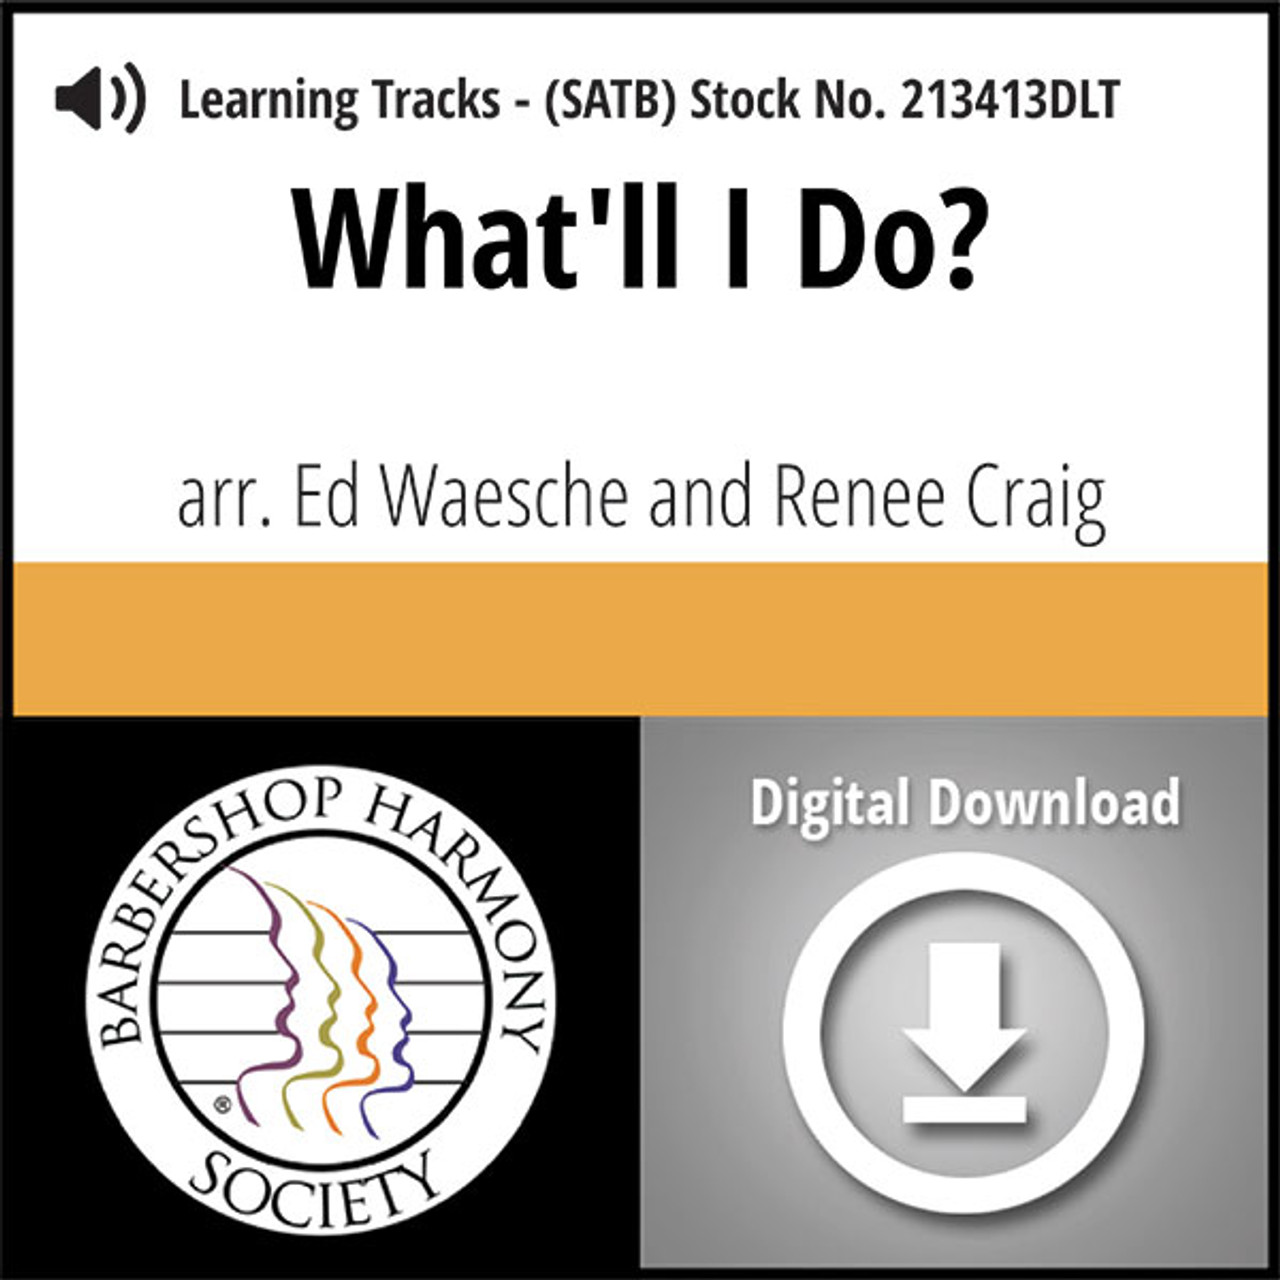 What'll I Do? (SATB) (arr. Warsche & Craig) - Digital Tracks for 213412